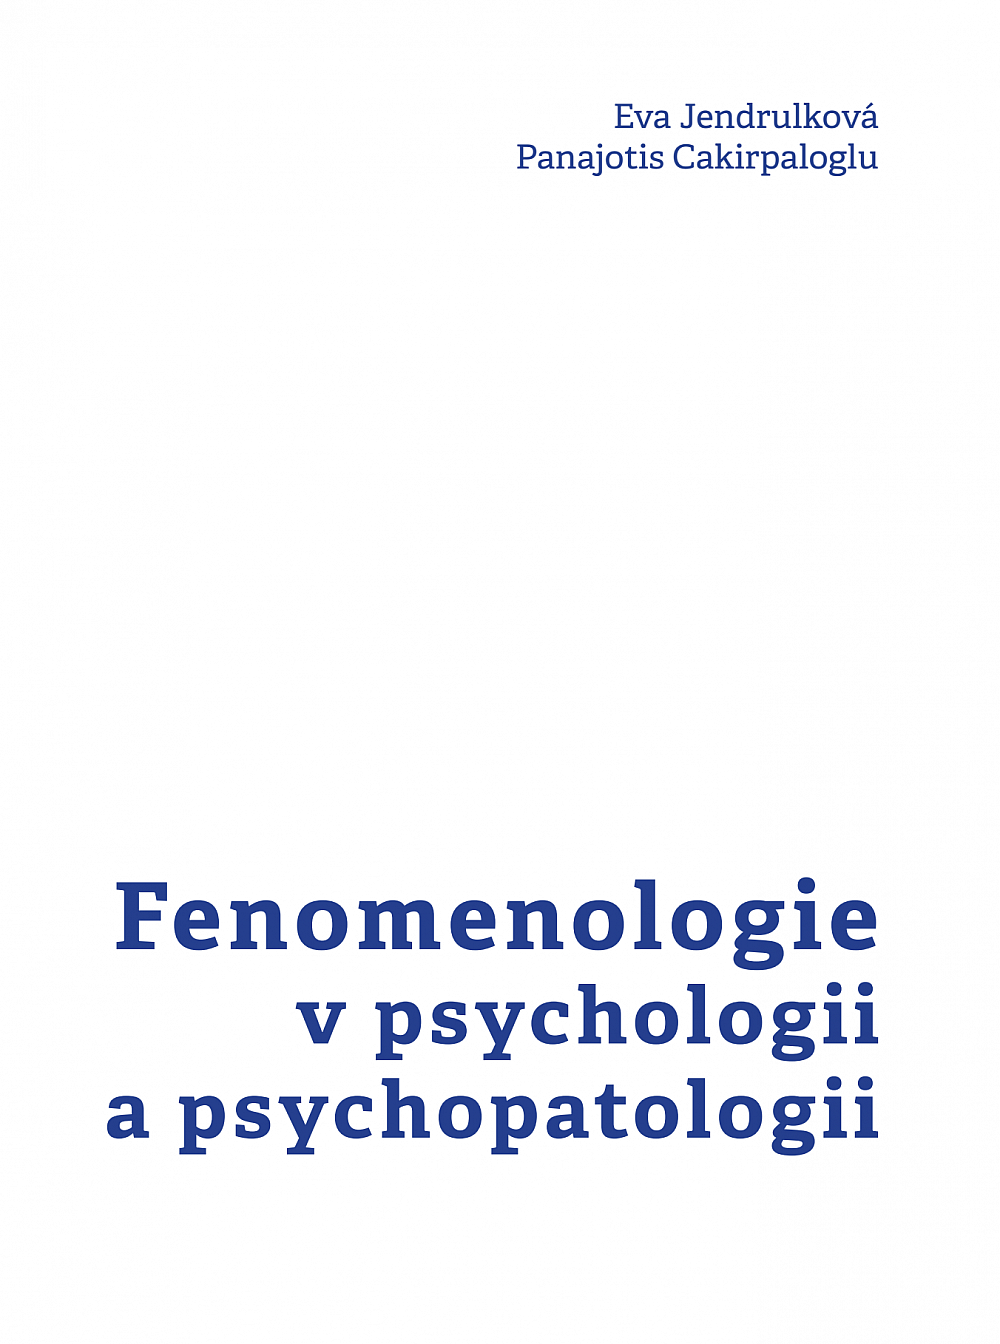 Fenomenologie v psychologii a psychopatologii